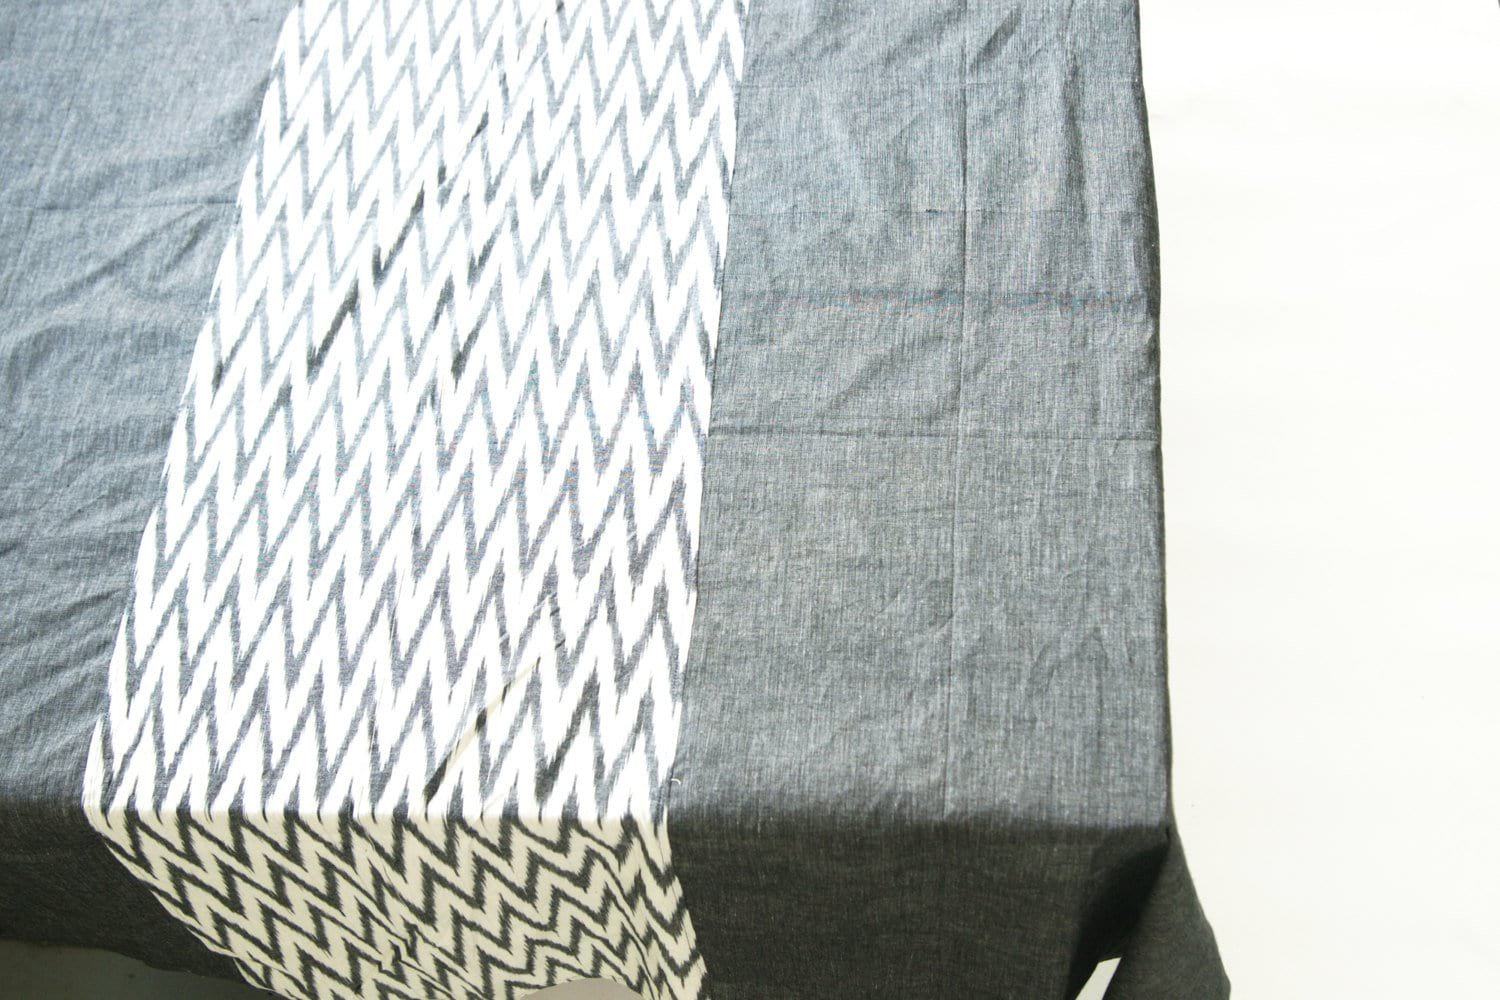 Rustic Loom Gray Chevron Zig Zag Cotton Tablecloth Handwoven Ikat Stripe
Jungle Pillows